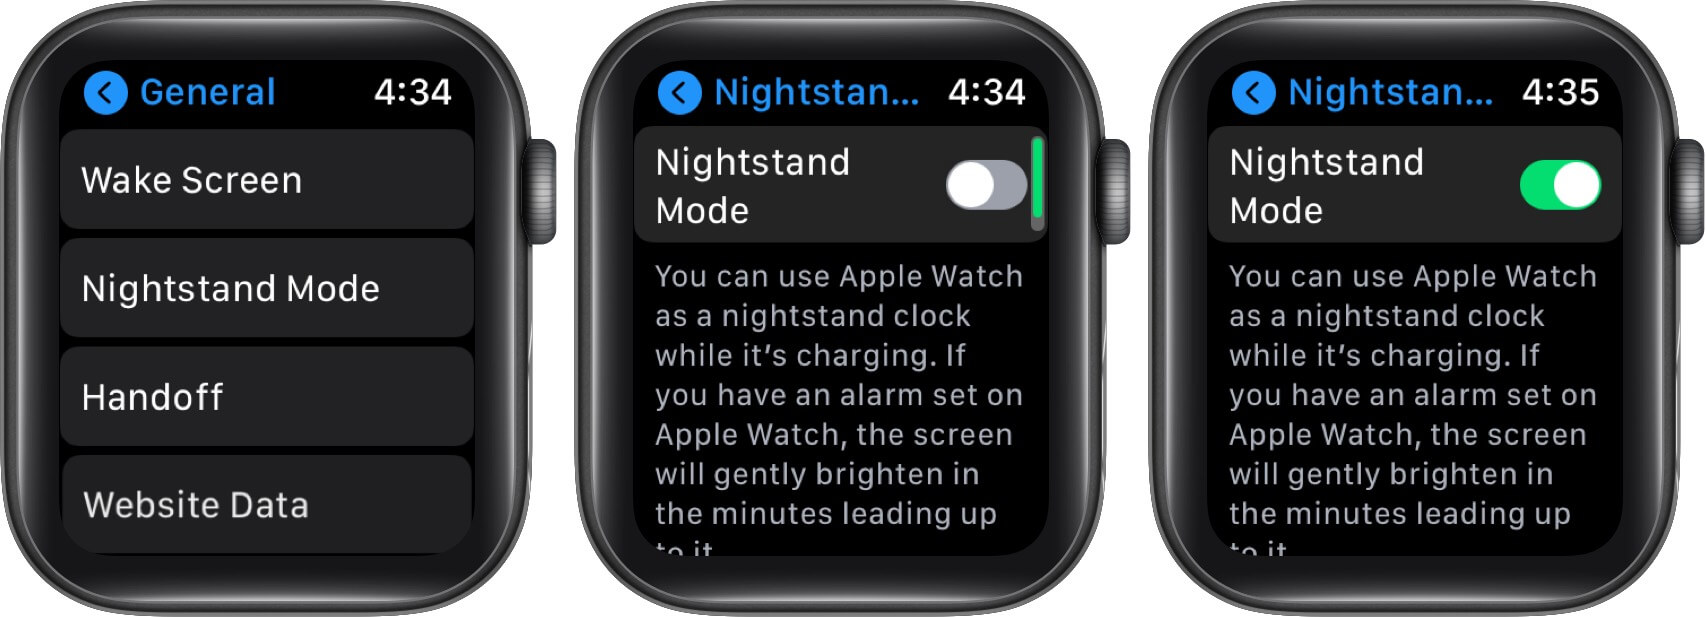 Turn ON Nightstand Mode on Apple Watch